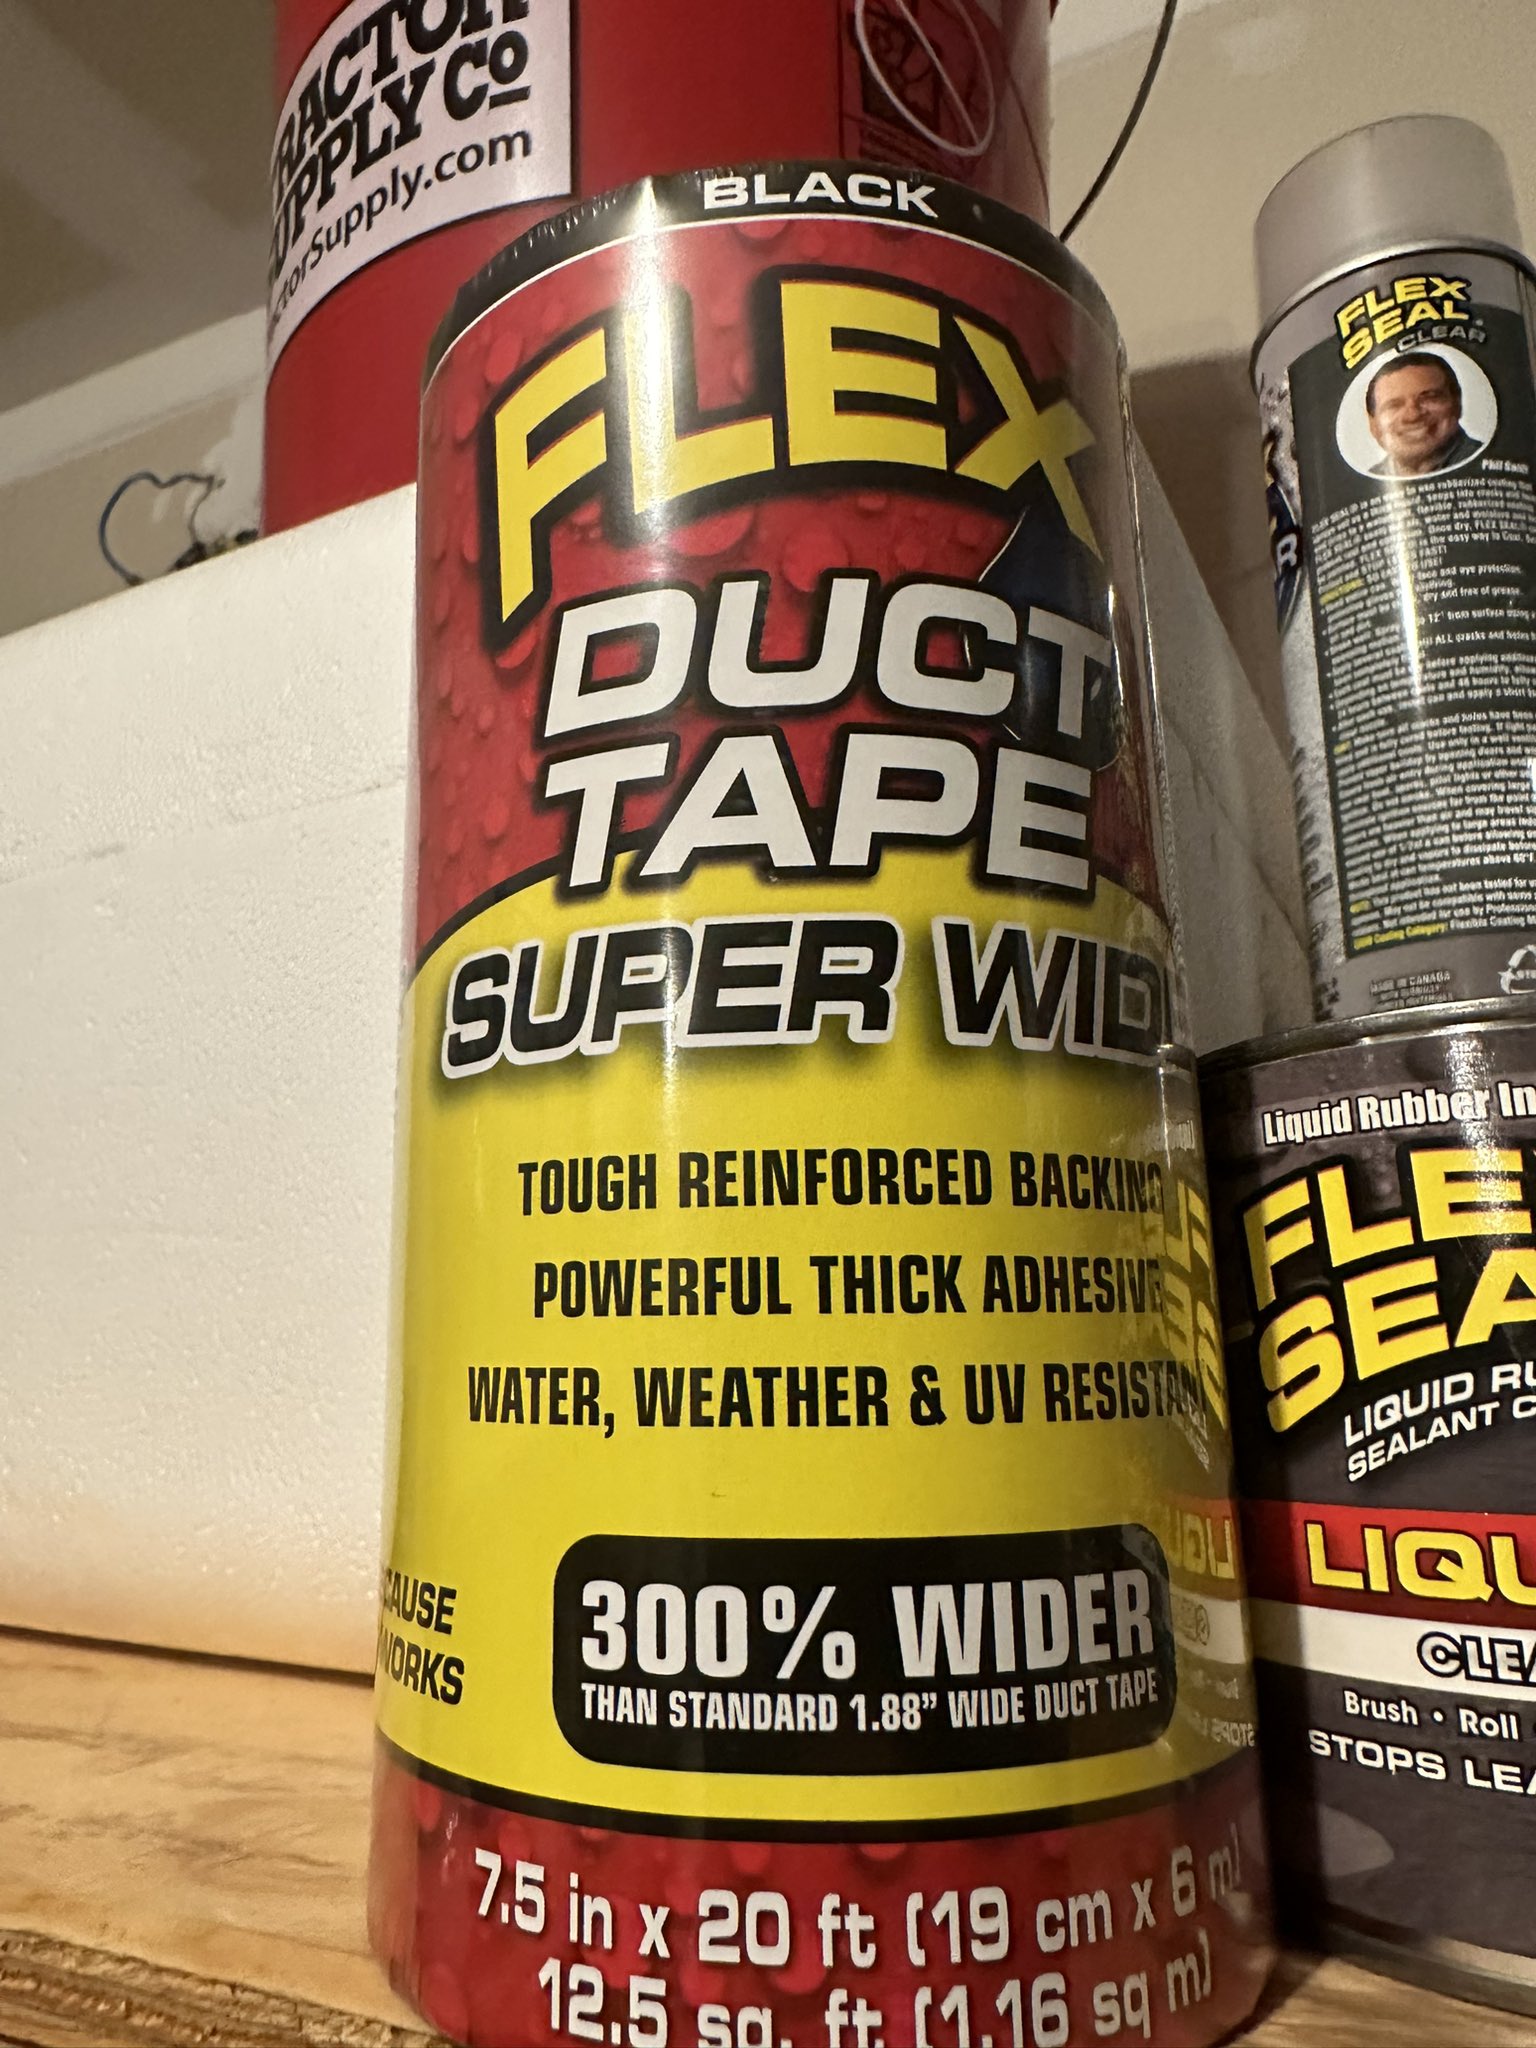 Flex 7.5 in. x 20 ft. Black Duct Tape